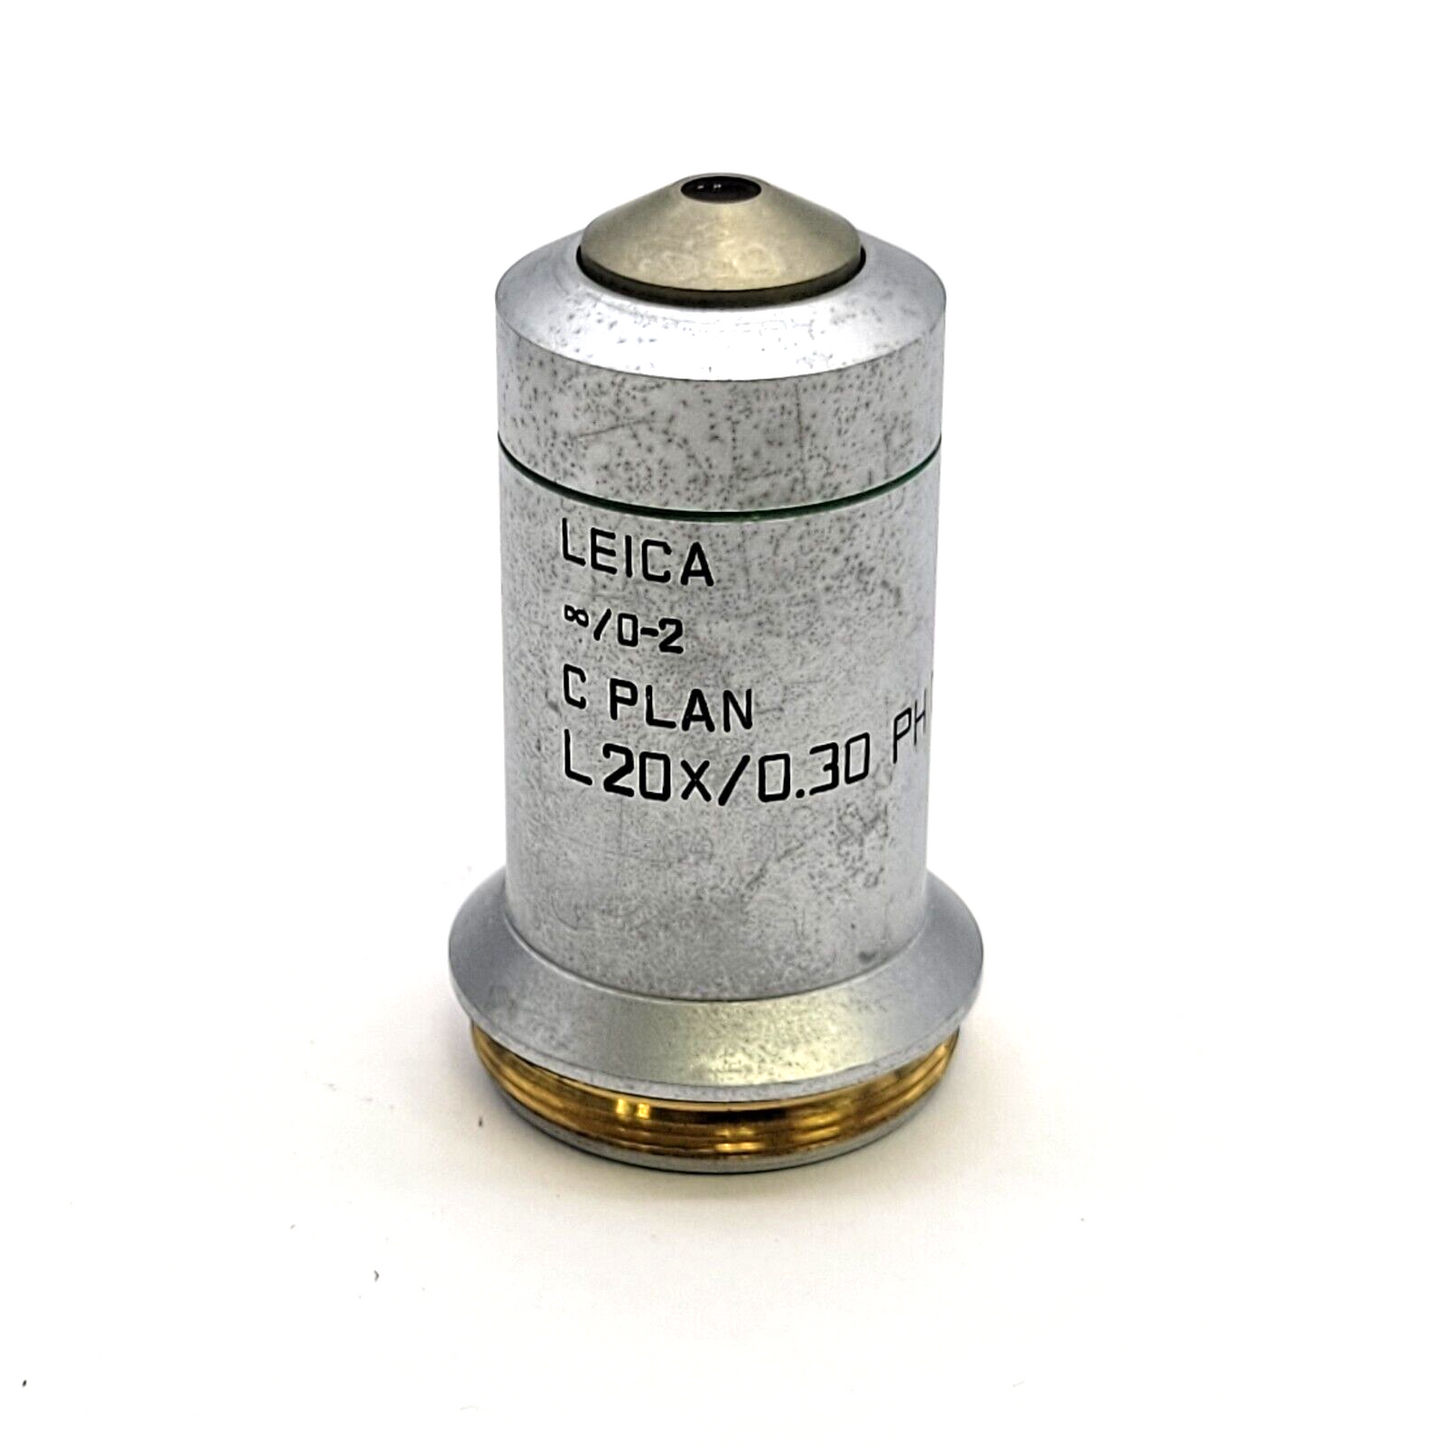 Leica Microscope Objective C Plan L 20x Ph1 ∞/0-2 506152 Phase Contrast - microscopemarketplace